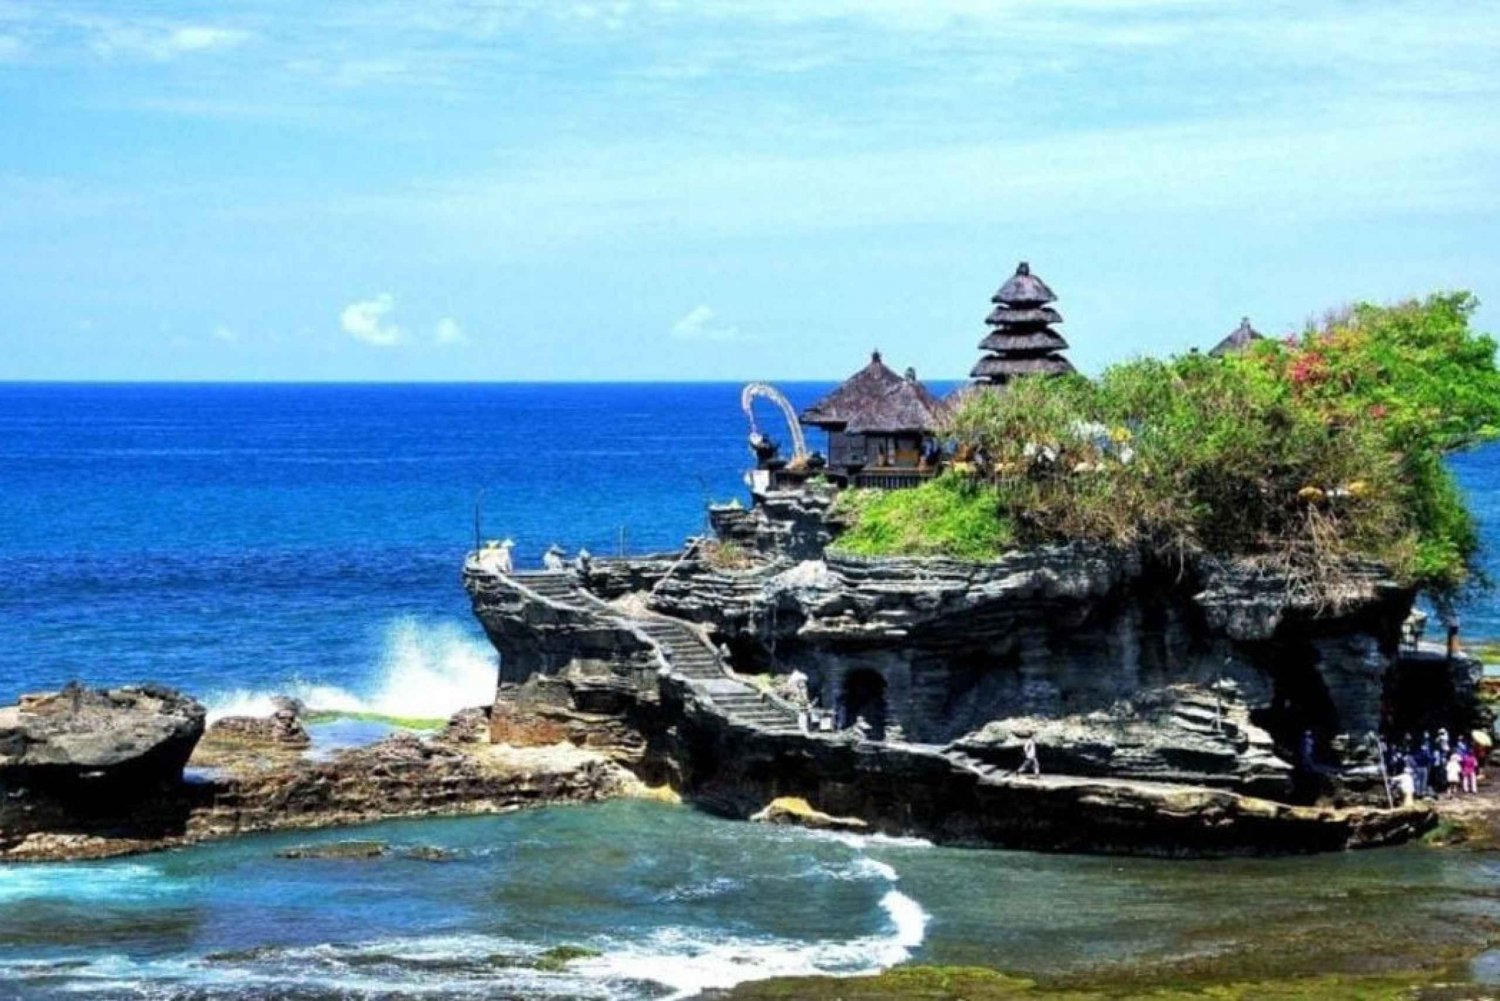 Bali: Tanah Lot Tempel, Padang-padang Strand, Kecak Dansen